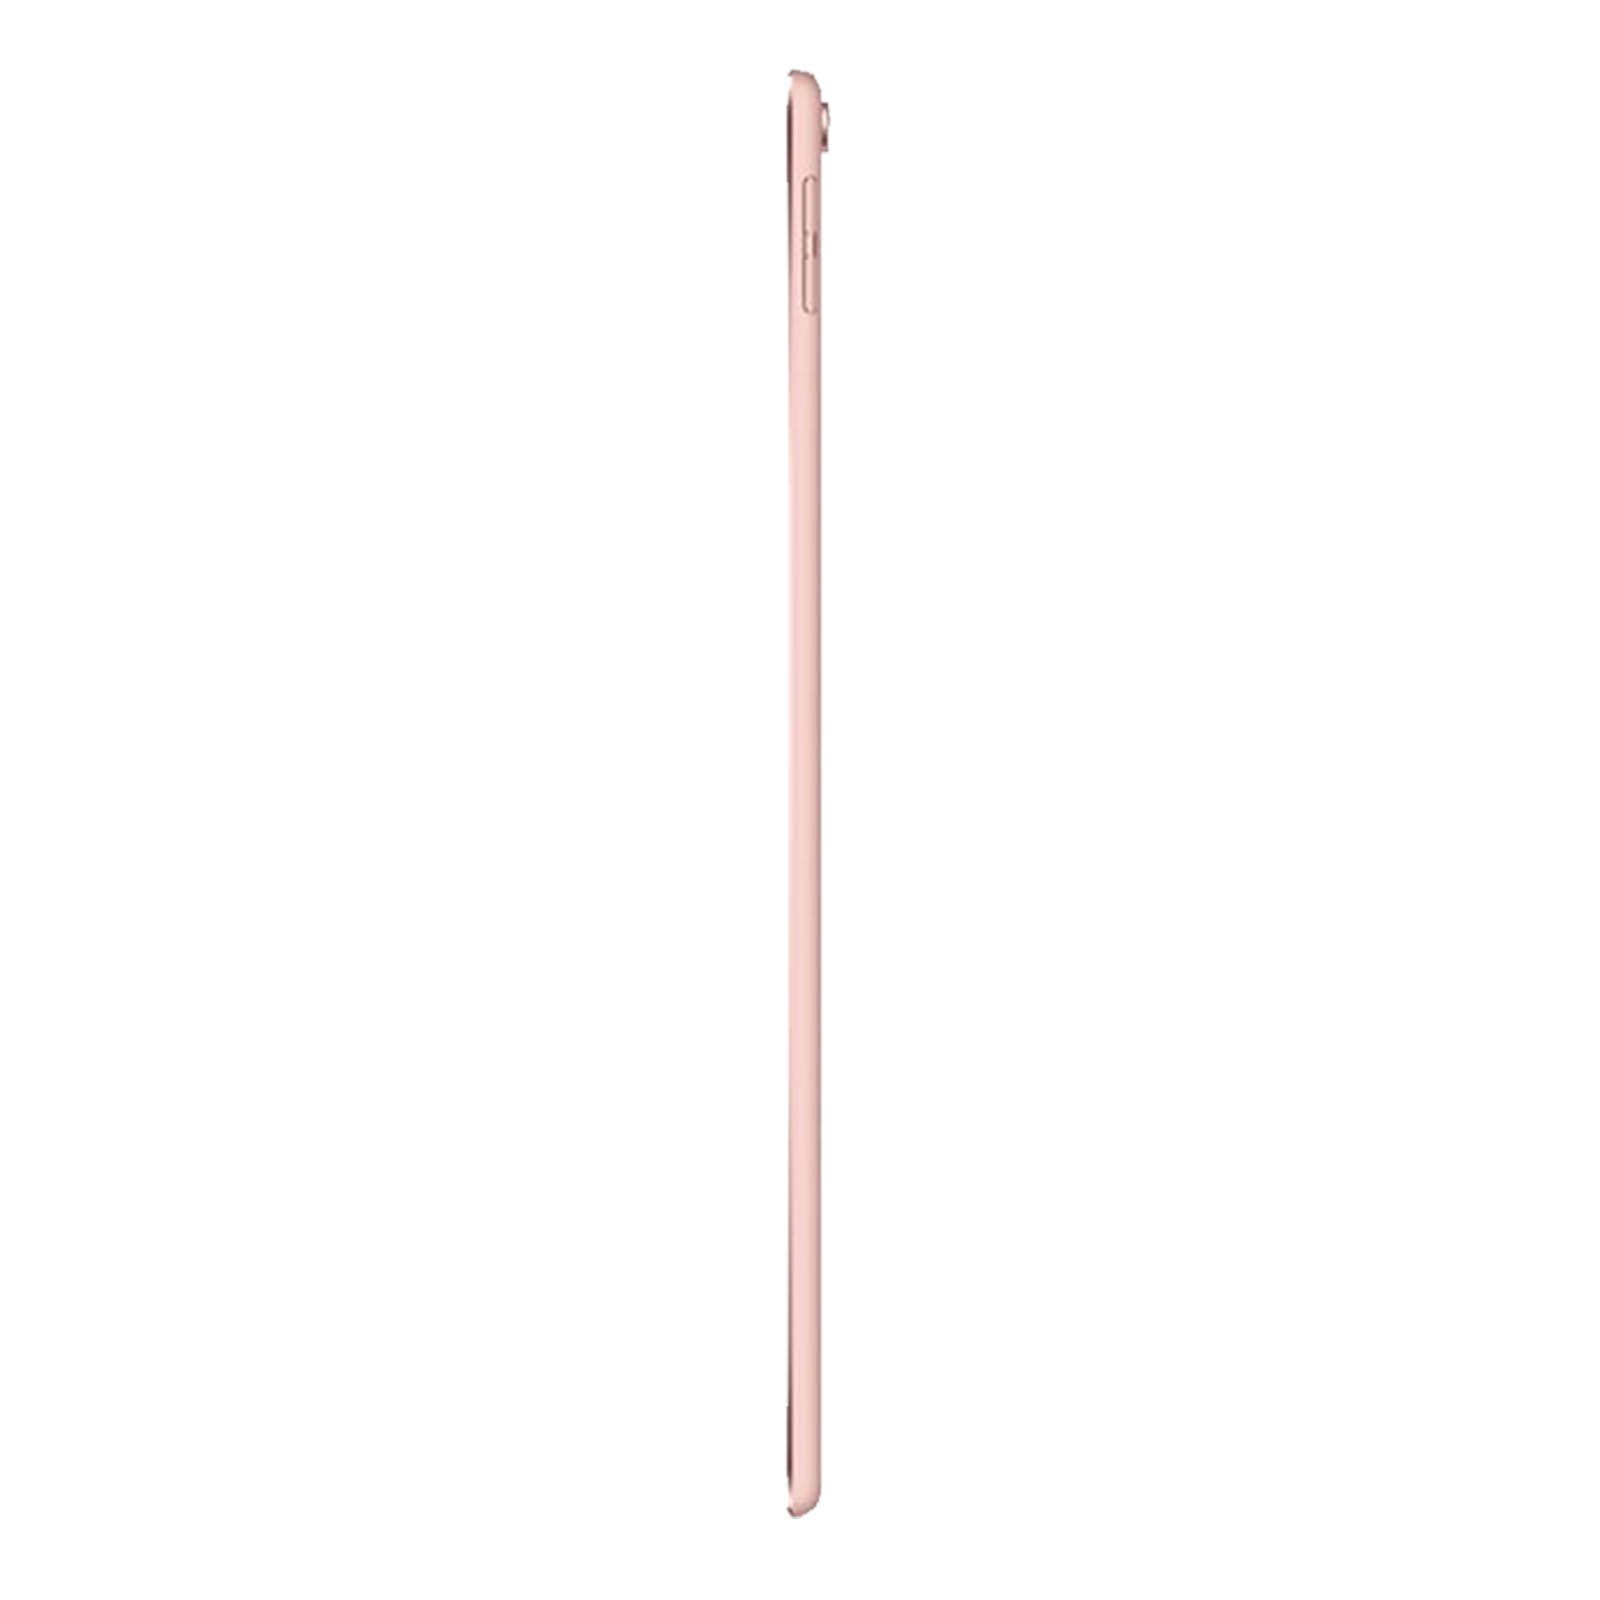 iPad Pro 10.5 Inch 64GB Rose Gold Good - Unlocked